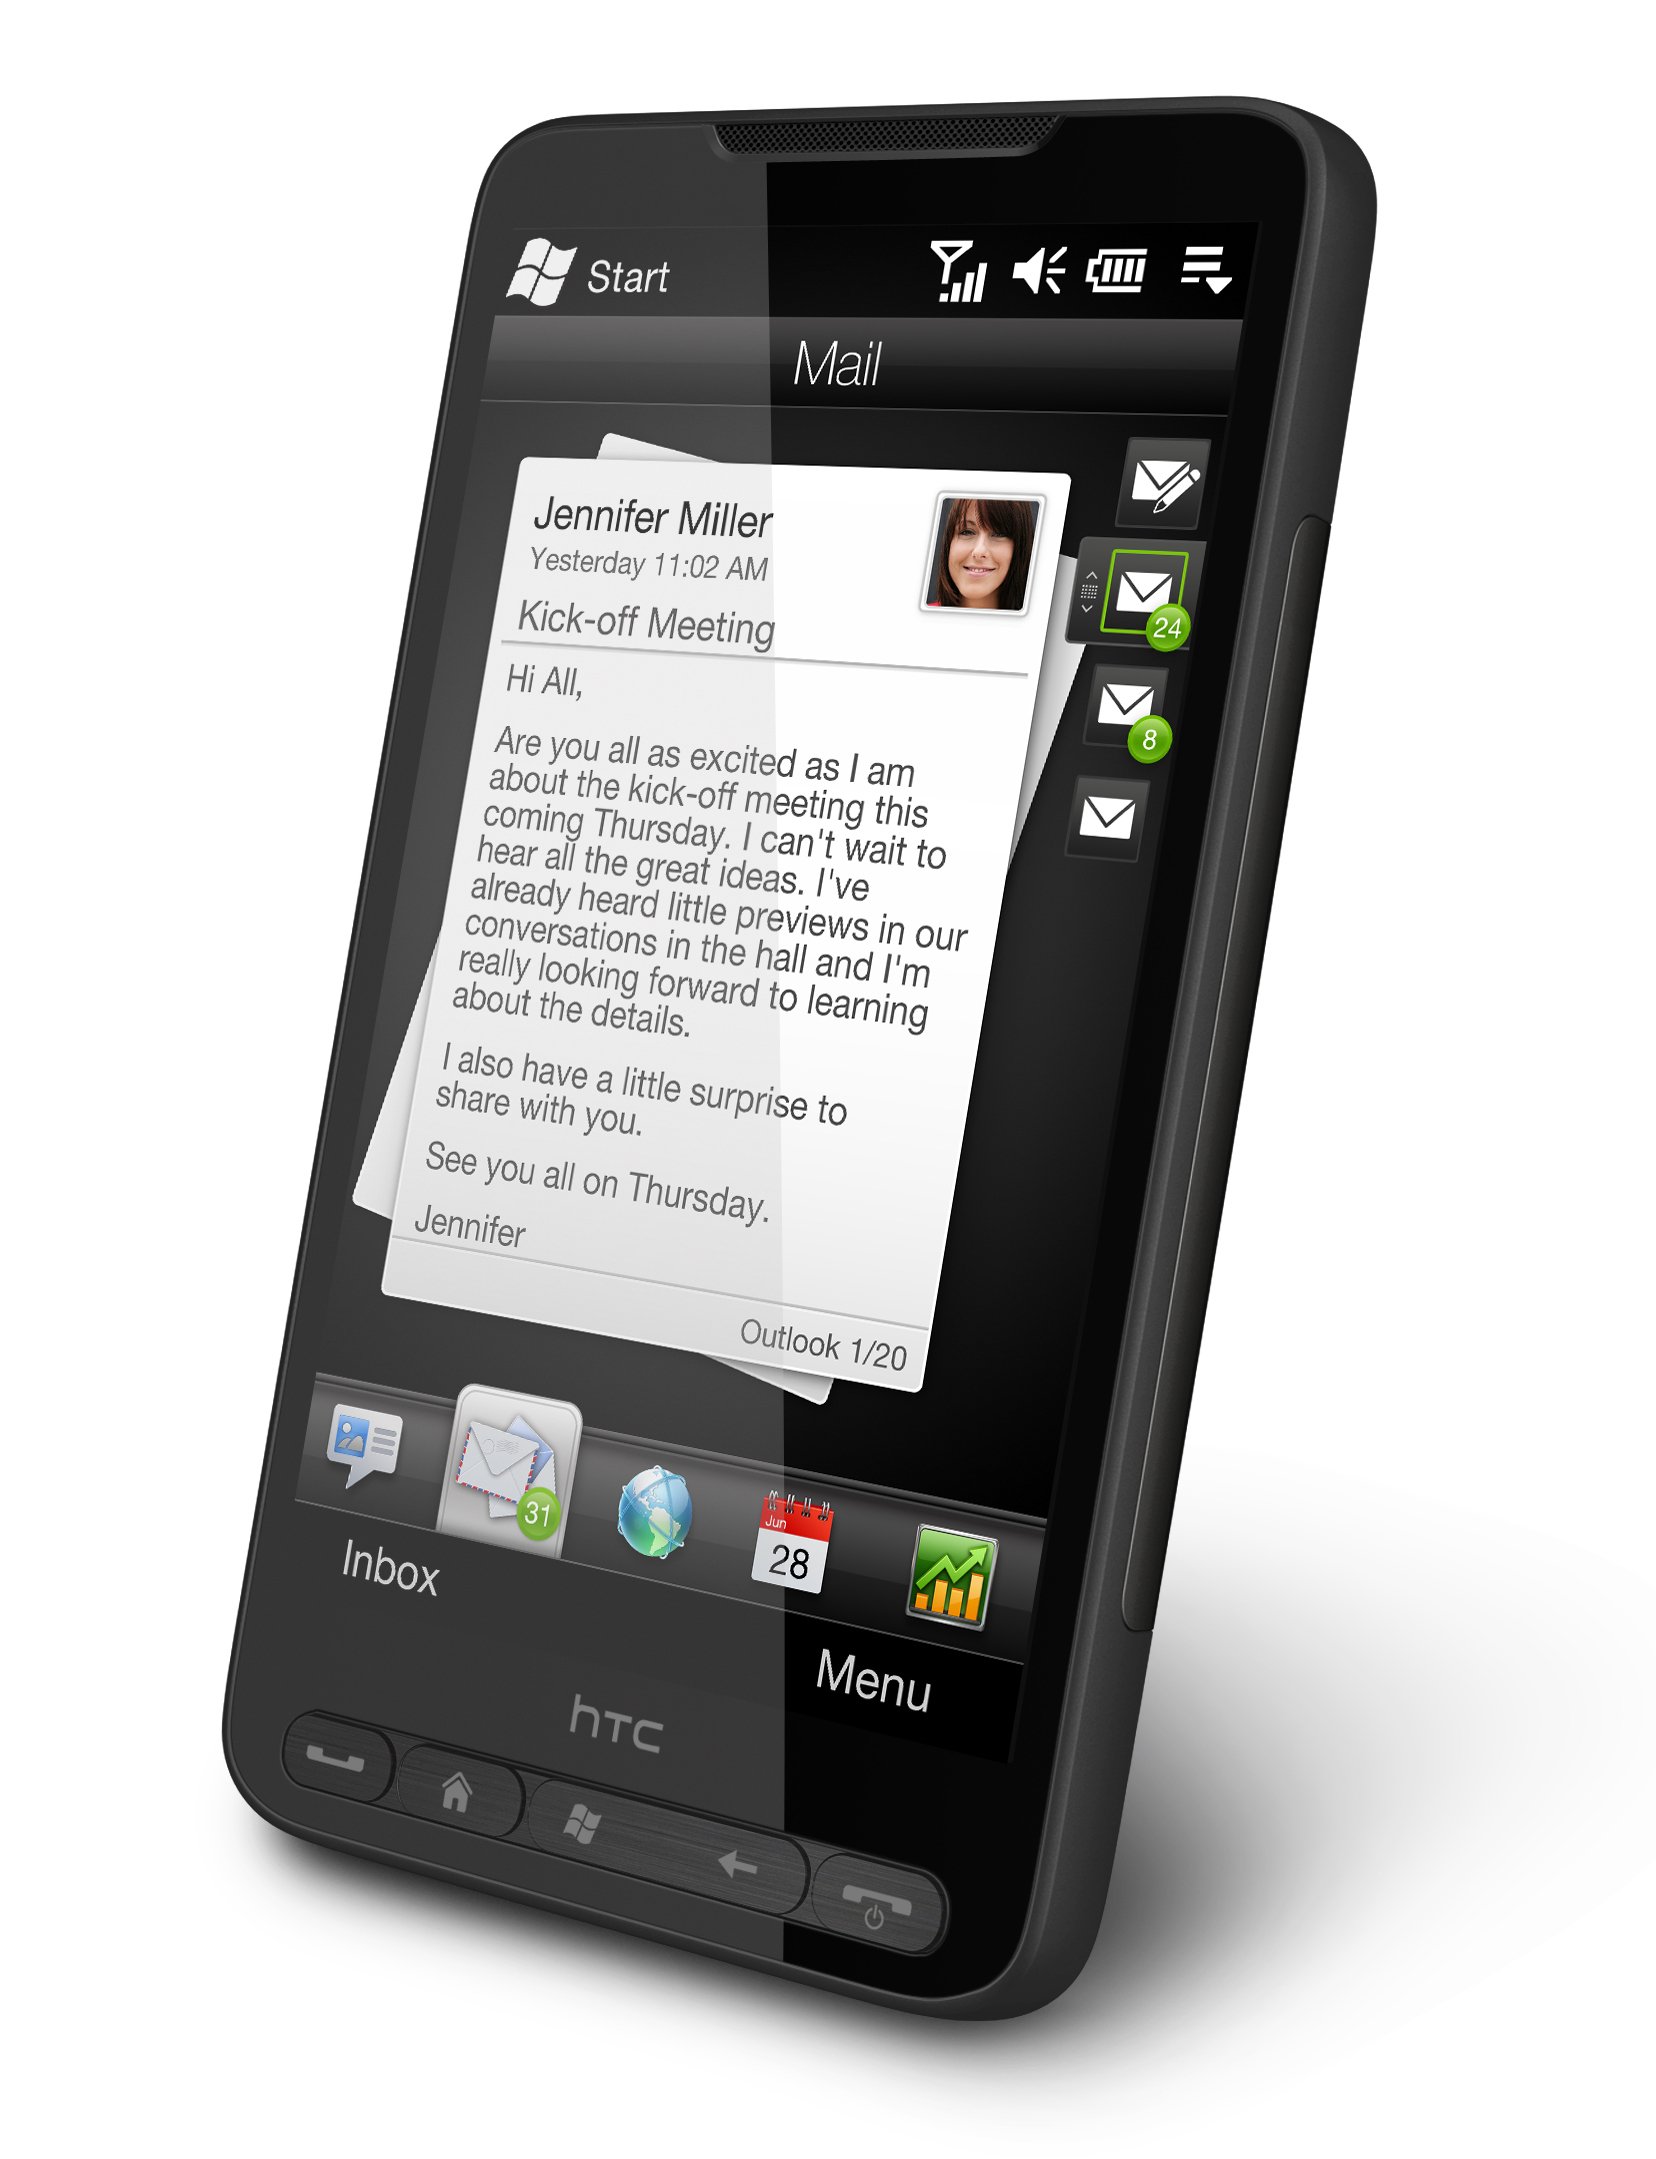 HTC HD 2